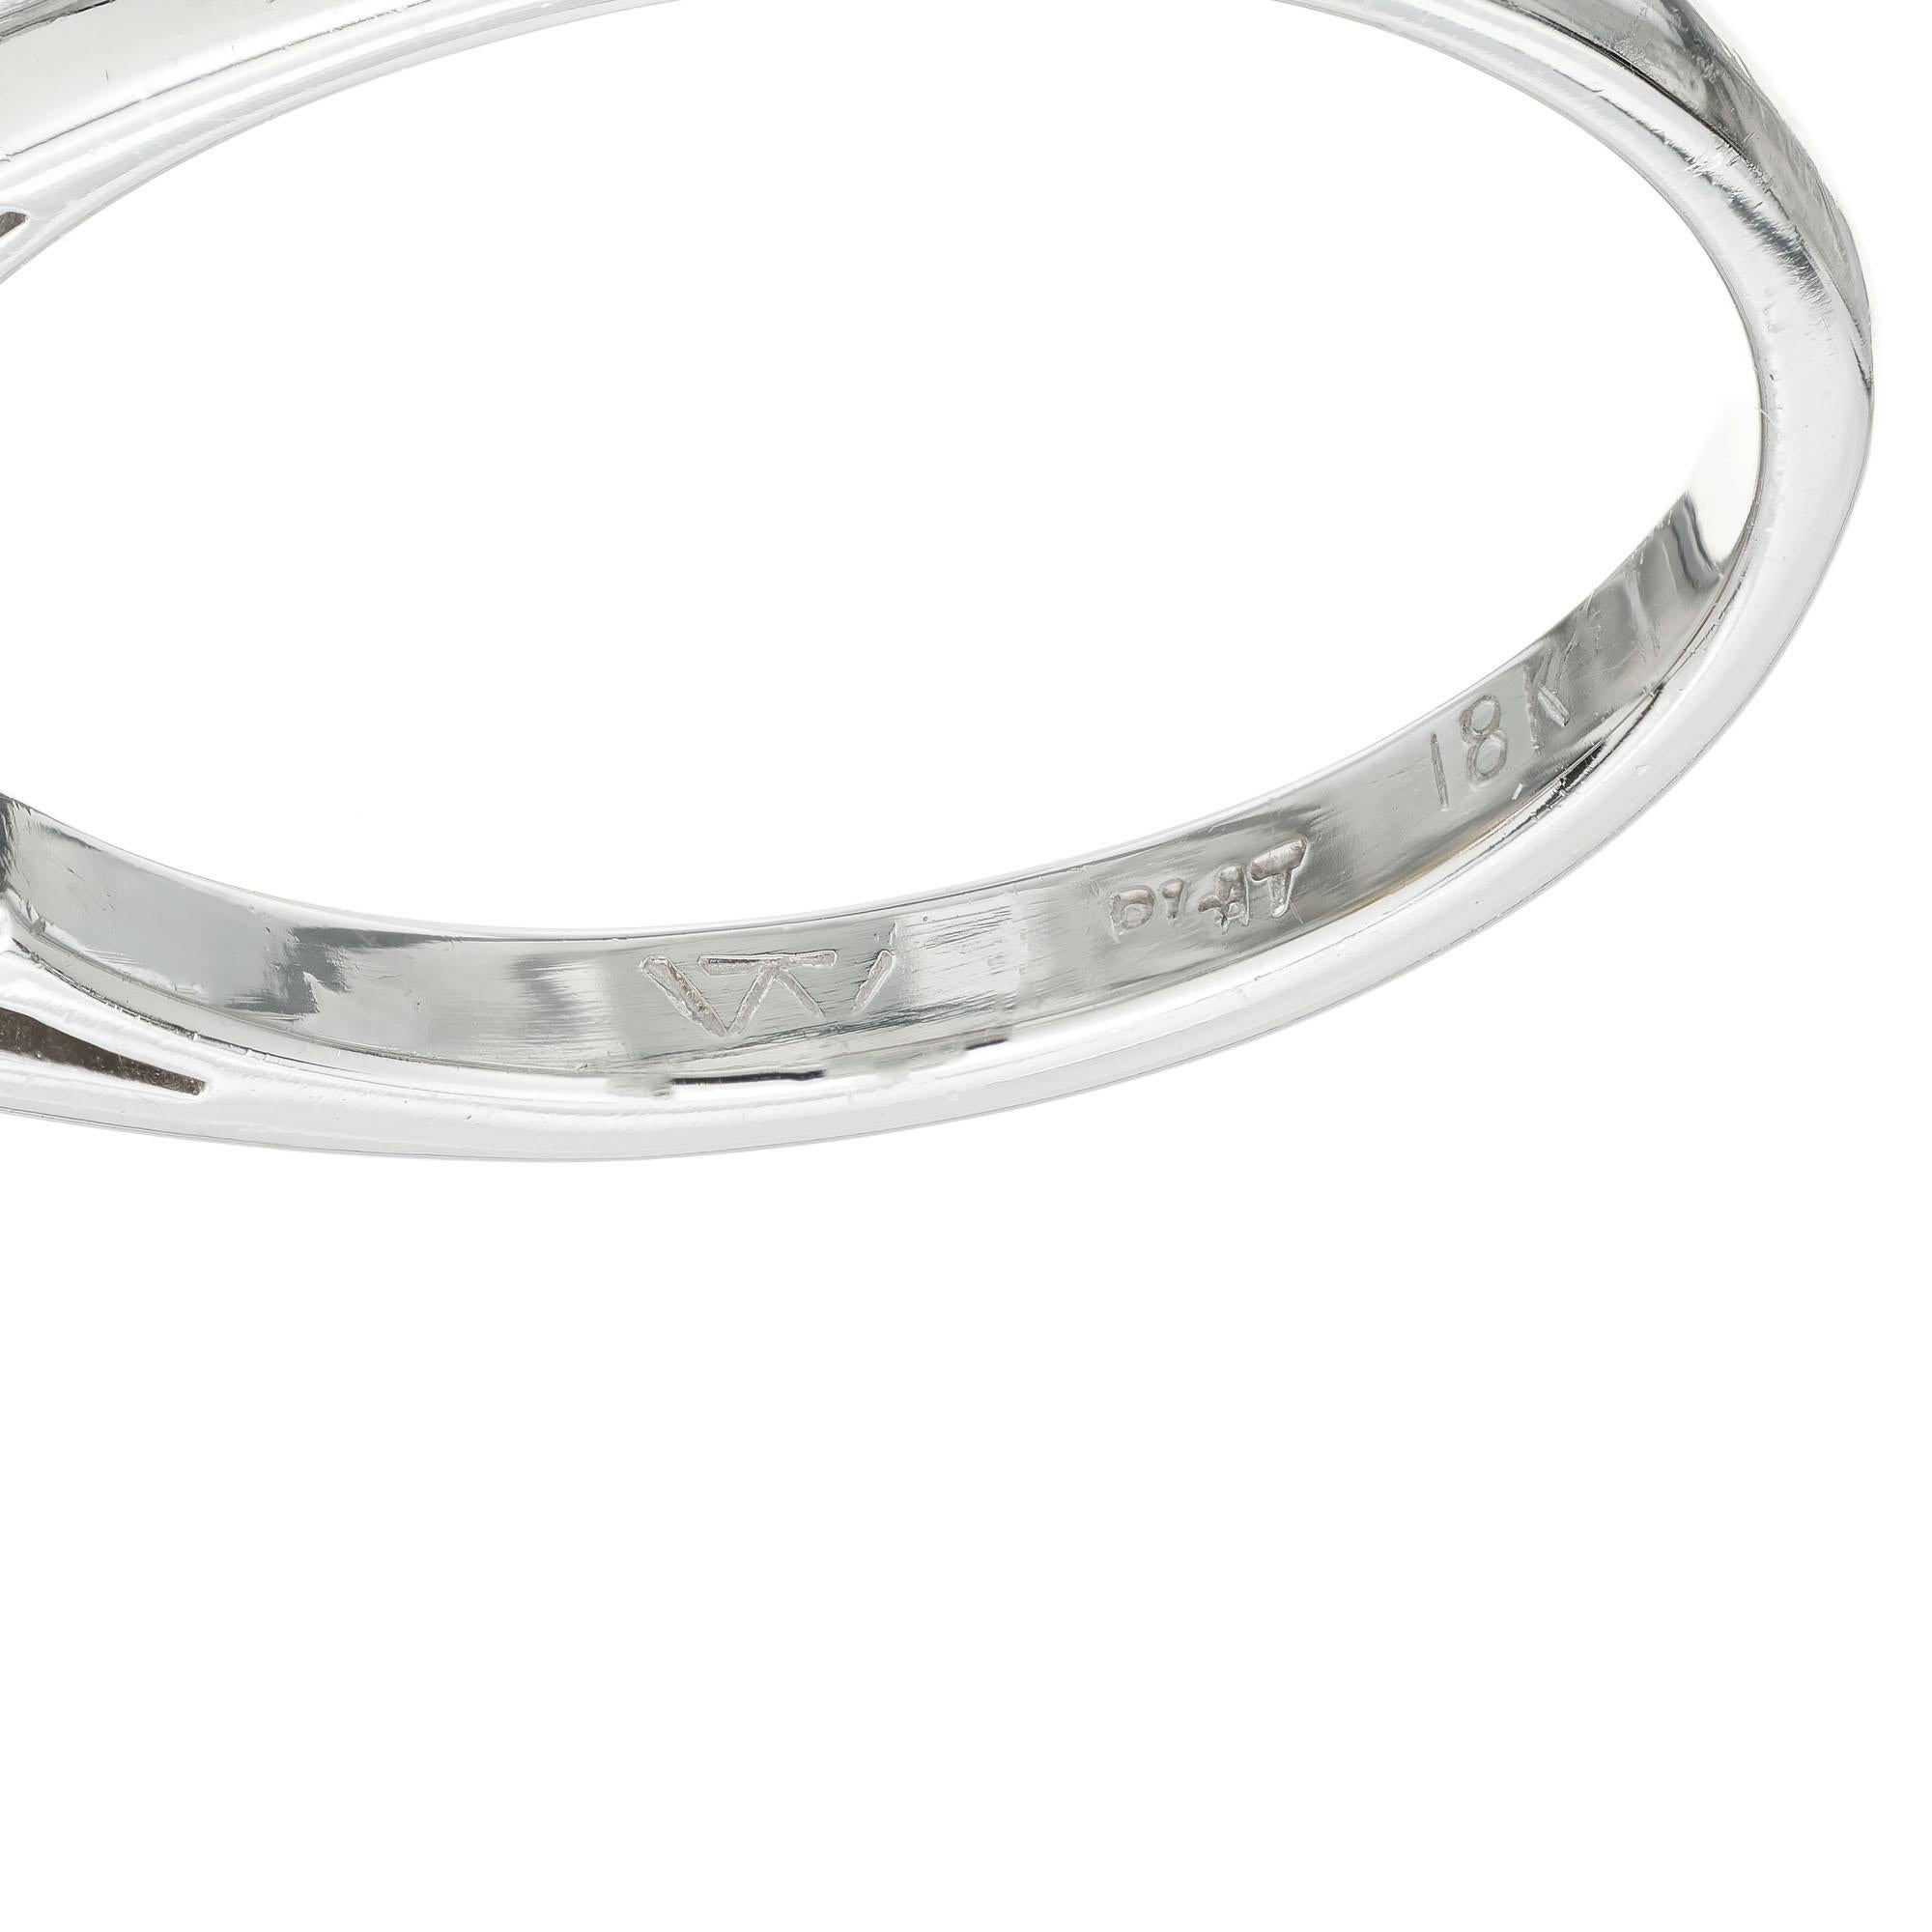 1.46 Carat Fancy Yellow Diamond Three-Stone Platinum Engagement Ring ...